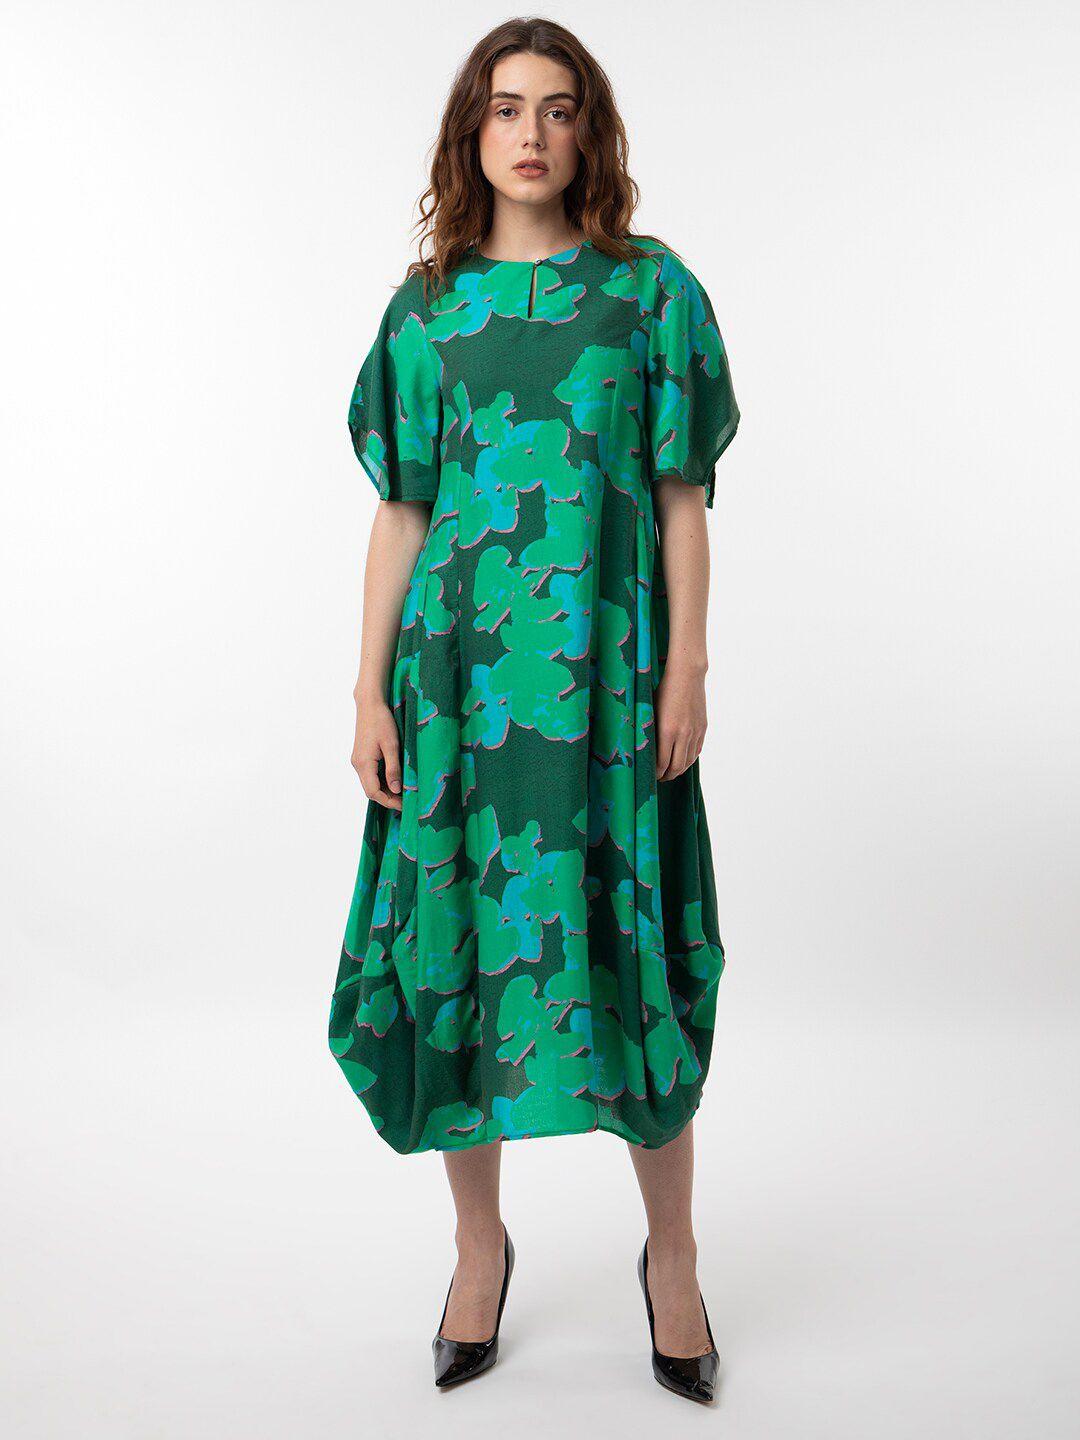 rareism green print dress